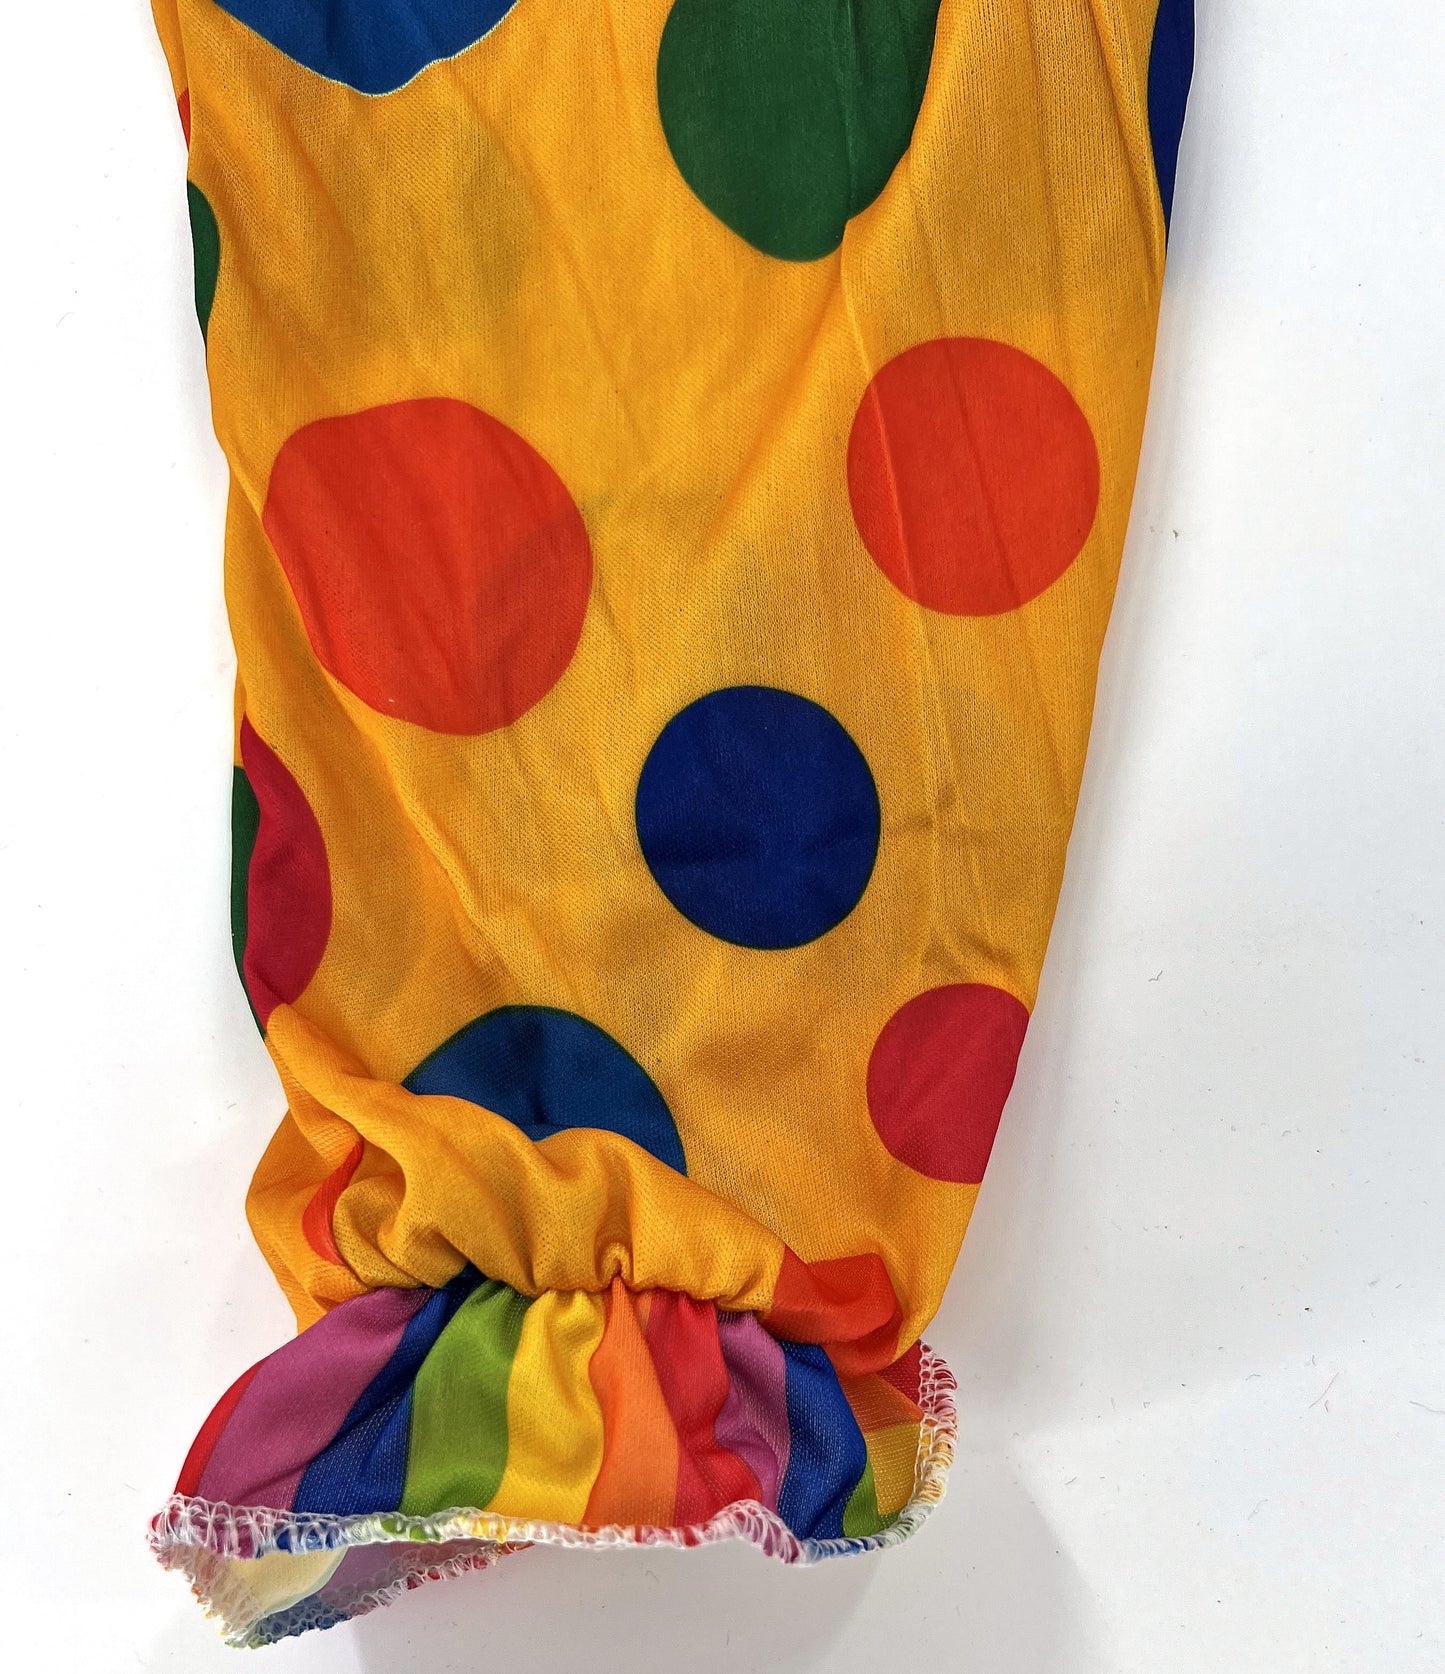 Children's Spotty Clown Fancy Dress Party Costume age 4-11 years